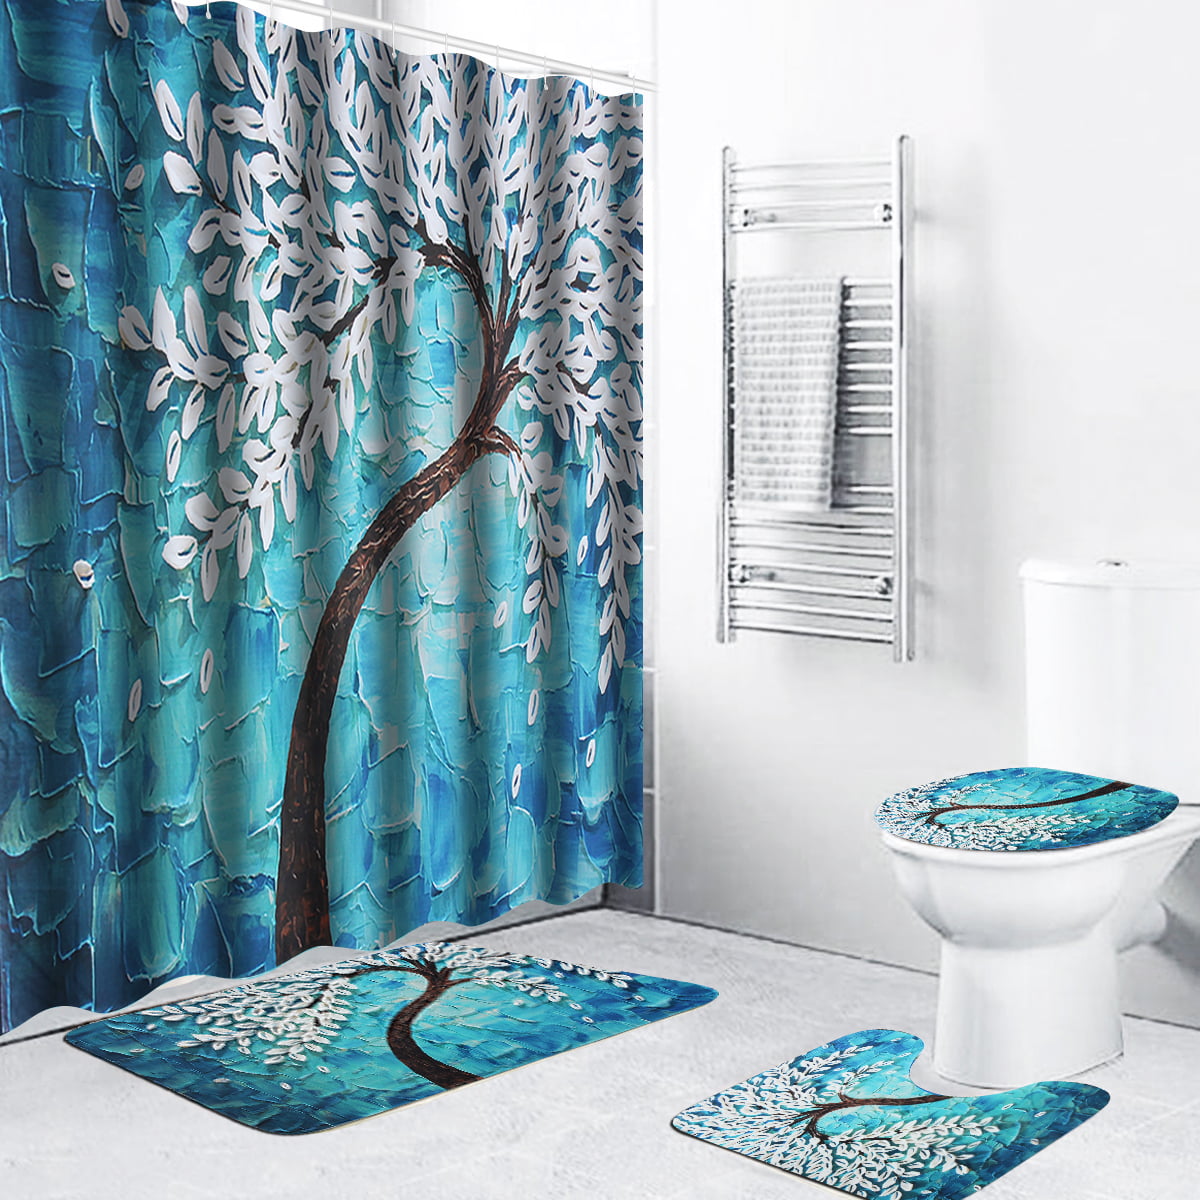 Art Words Design Waterproof Shower Curtain Sets Live Love Bathroom Decor Mat 